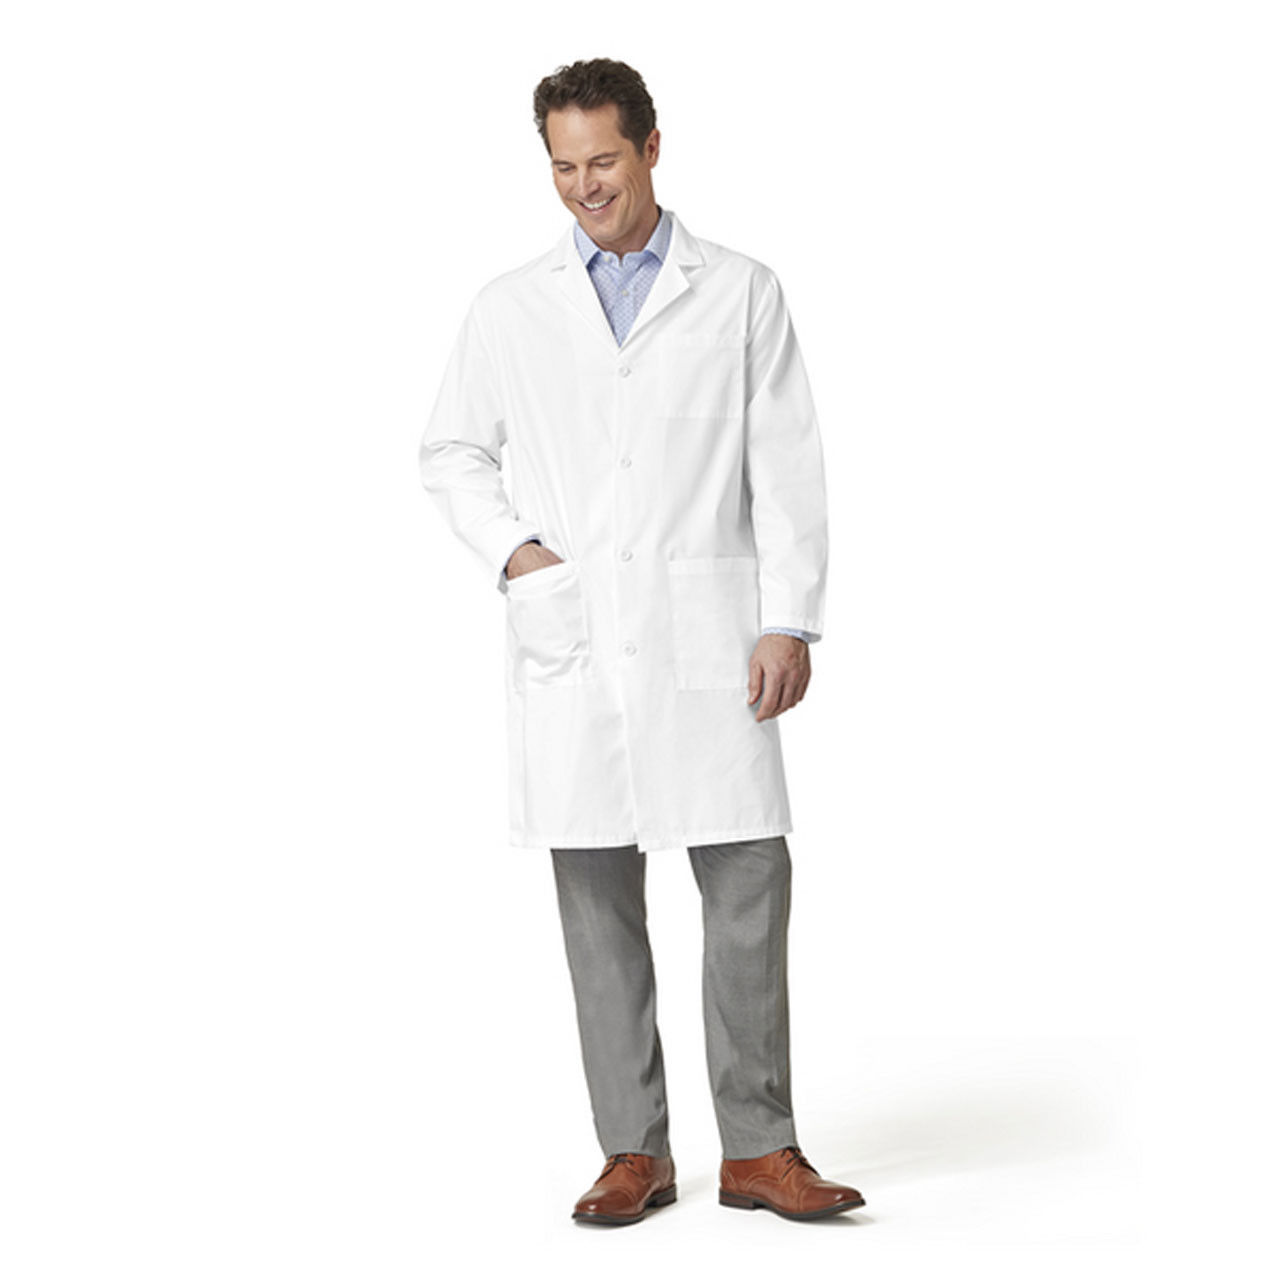 Unisex Lab Coat, White - Bulk Case of 30 Questions & Answers